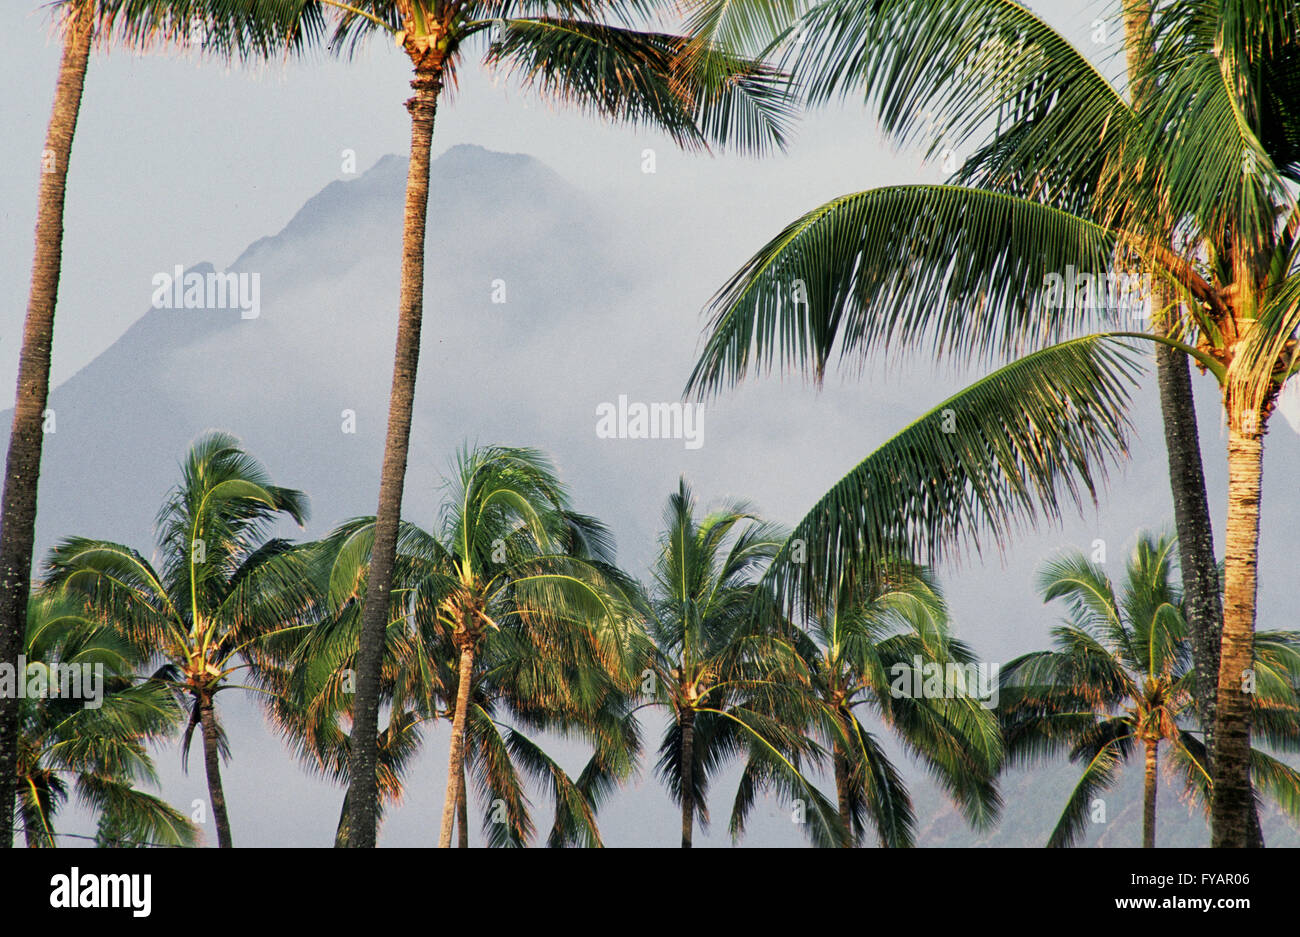 USA, Hawaii. Mid-Pacific, Insel Oahu, Palmen mit Bergen durch Morgennebel betrachtet Stockfoto